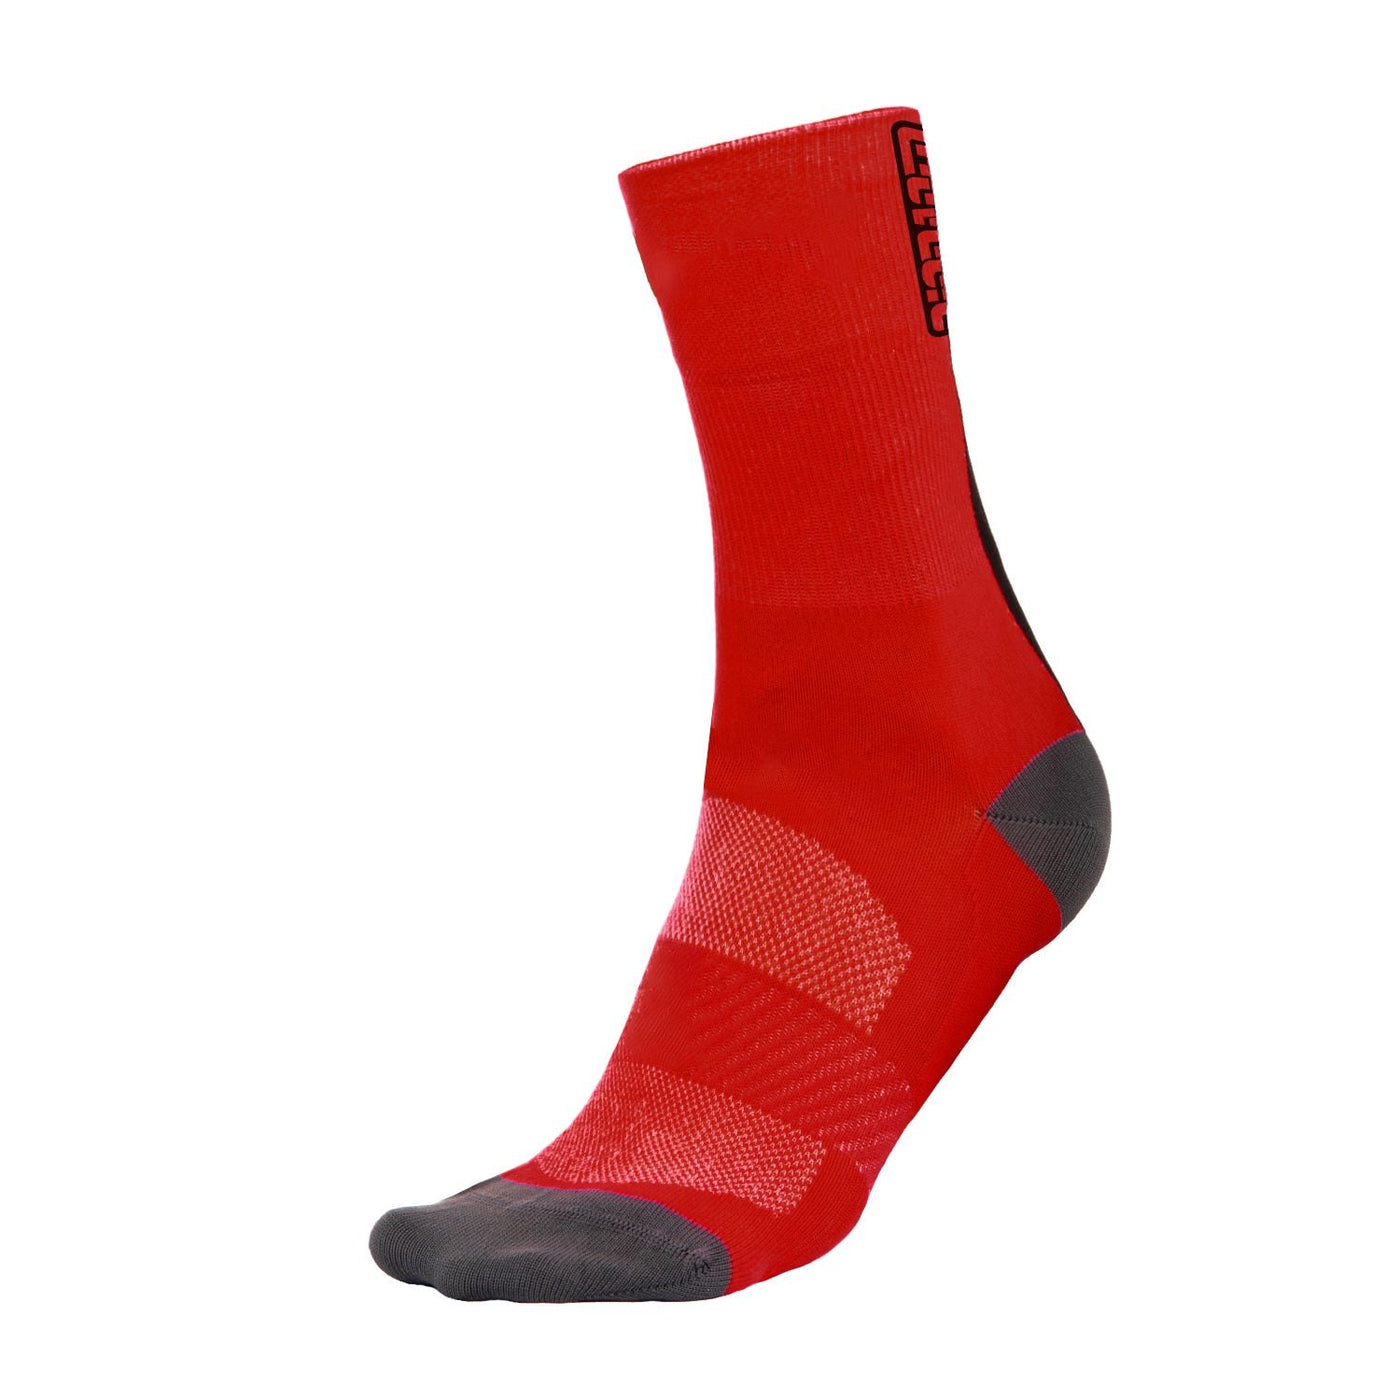 Bioracer Summer Unisex Cycling Socks (Red)